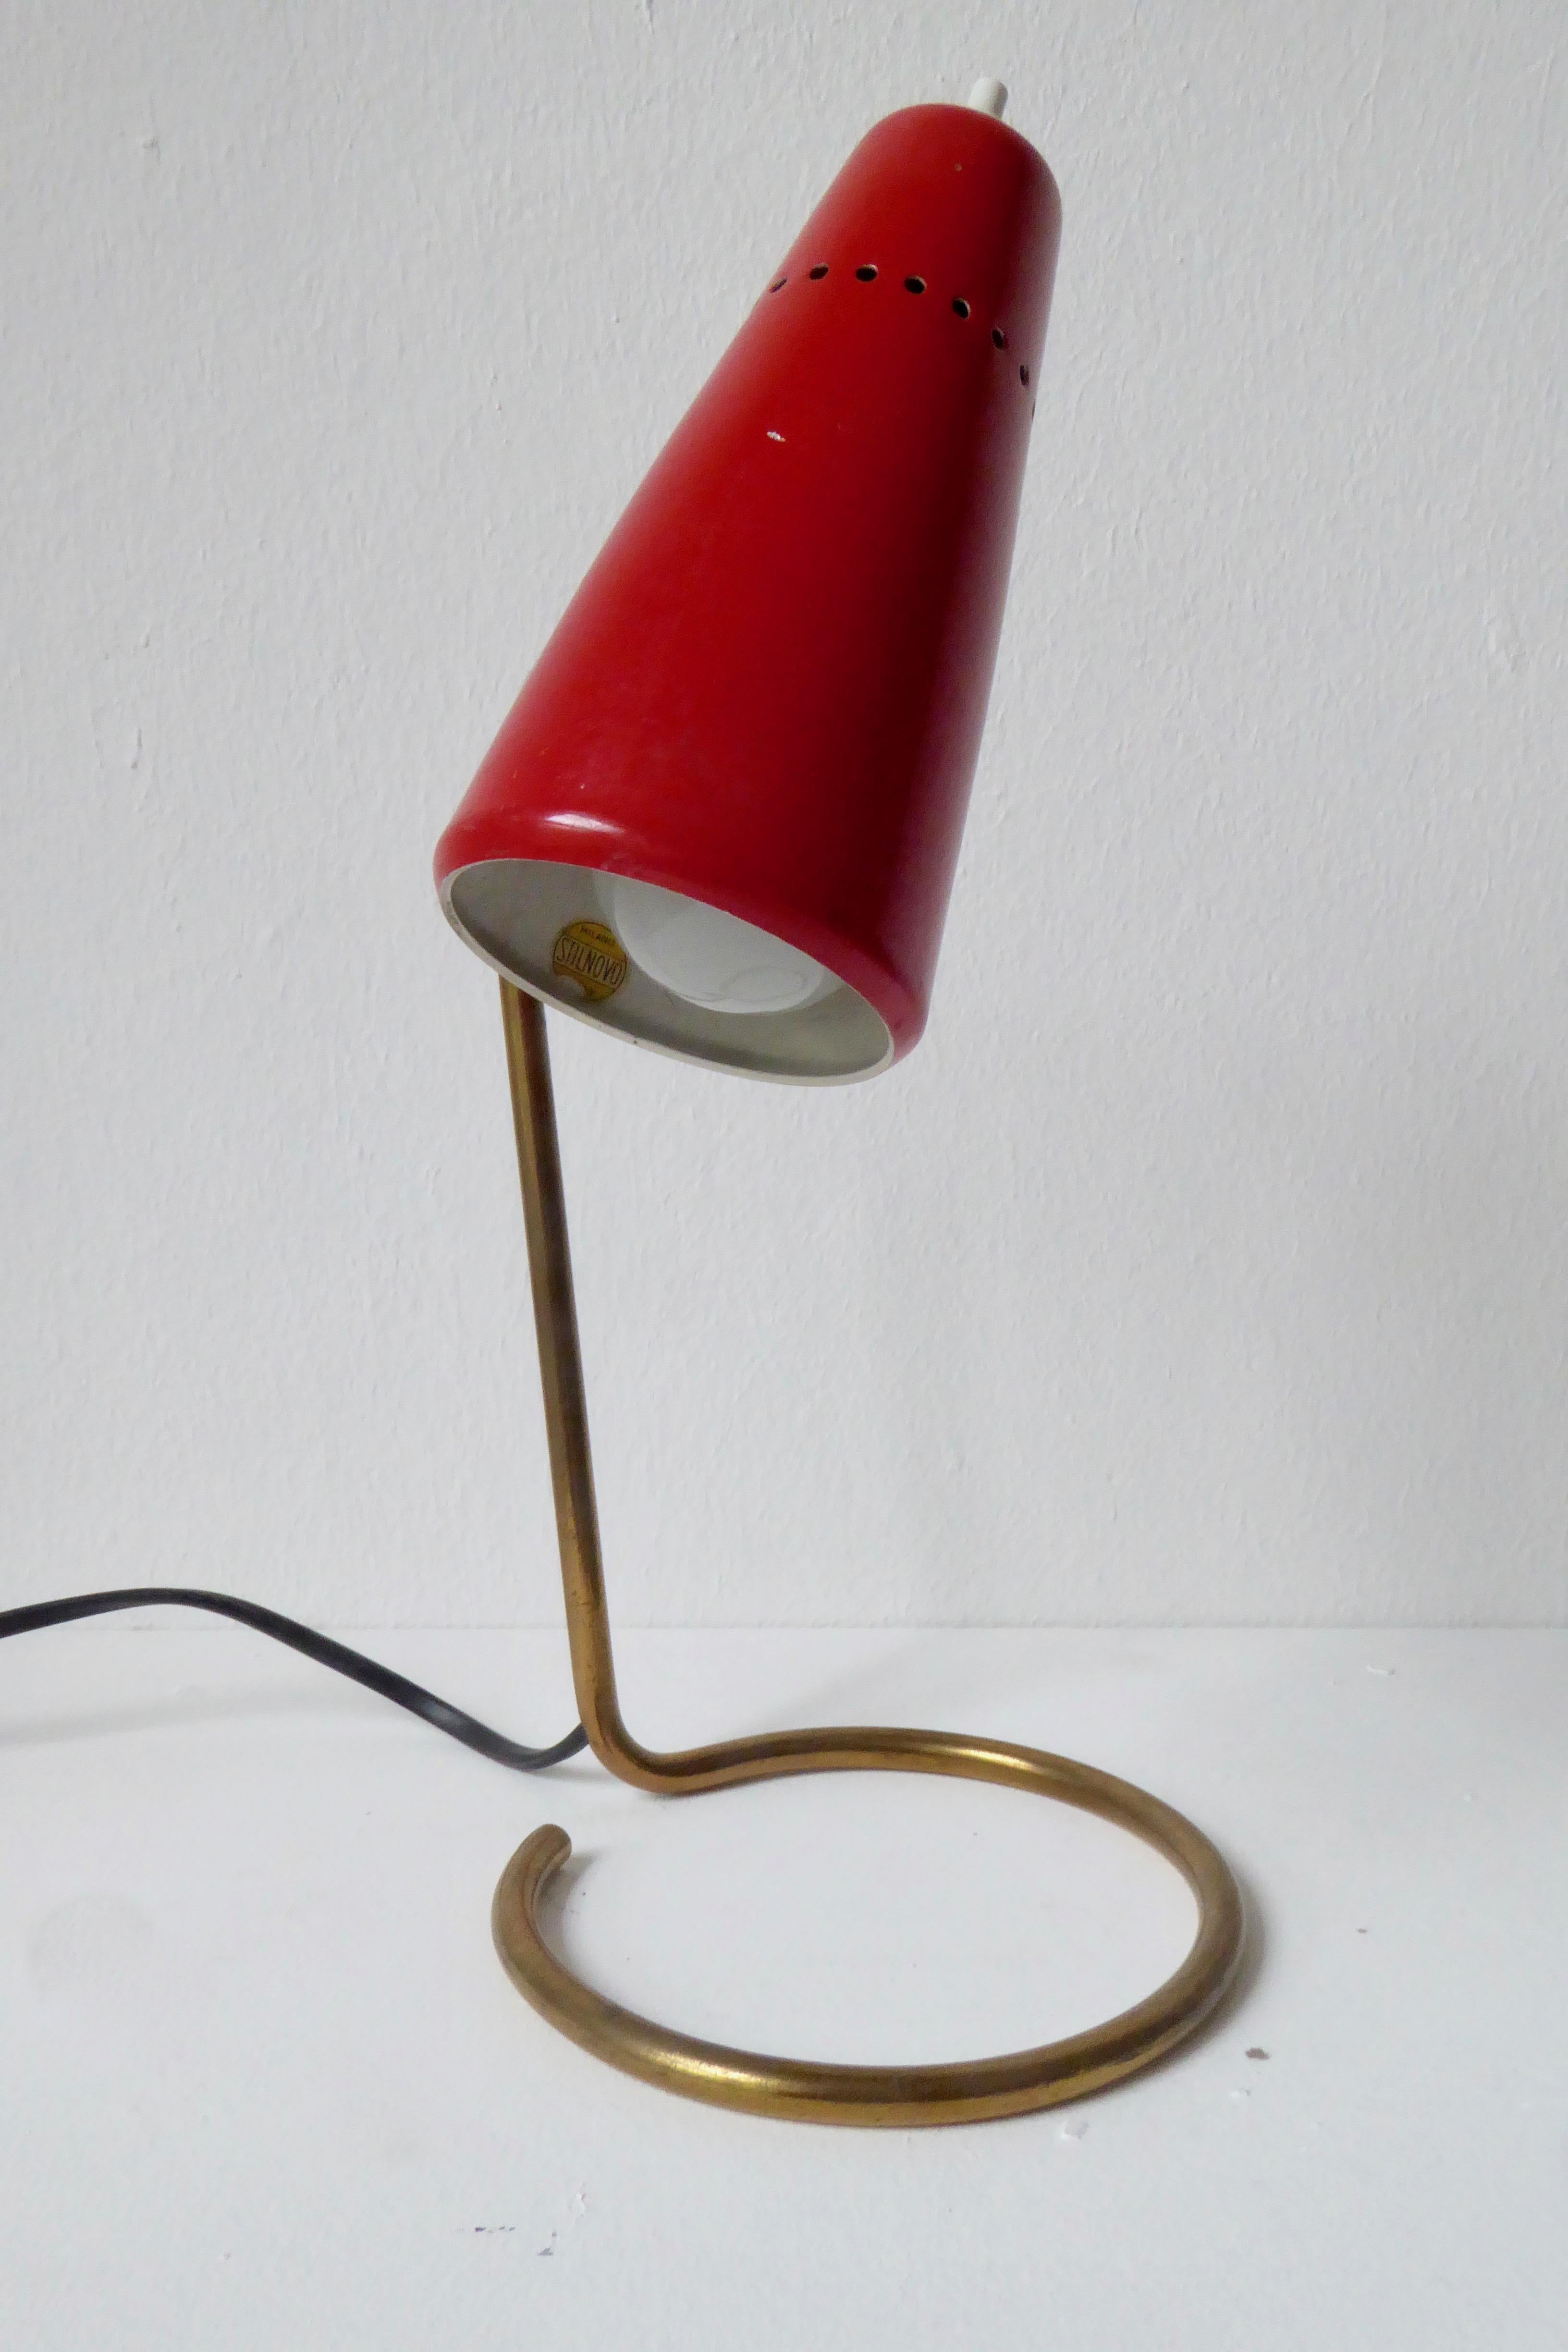 Stilnovo table lamp. Brass base and swiveling red cone. Shade inside with round Stilnovo sticker. Measures: Diameter shade 7cm.